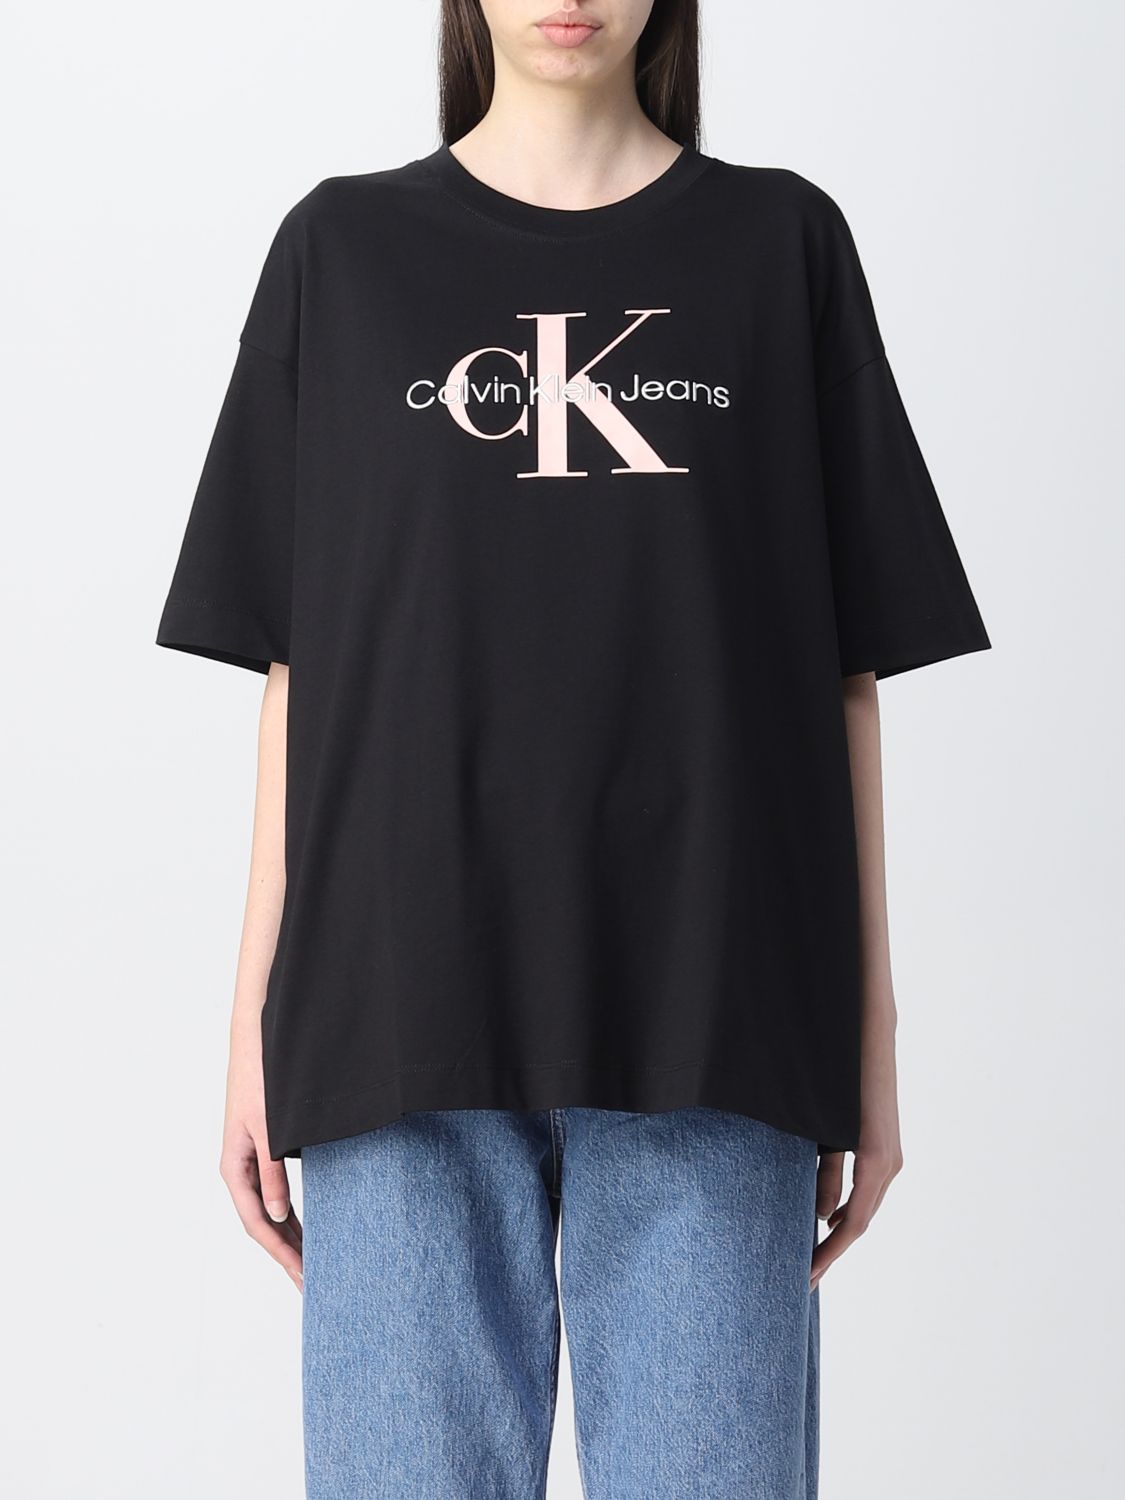 CALVIN KLEIN JEANS: t-shirt for women - Black | Calvin Klein Jeans t-shirt  J20J219948 online on 